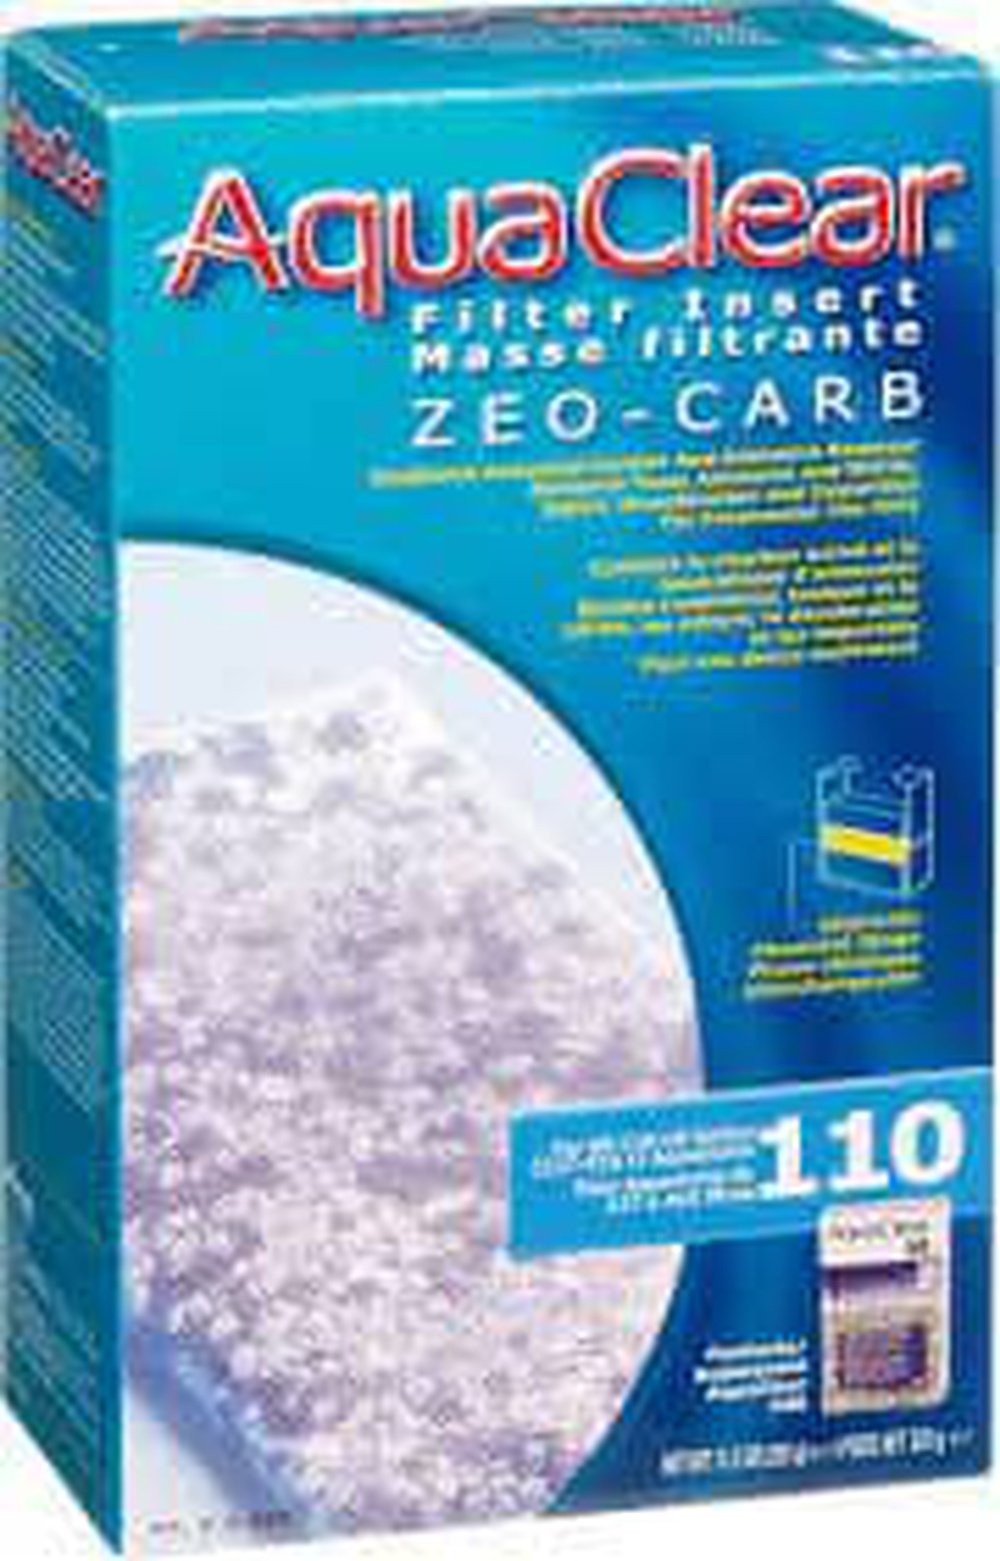 AquaClear Filter Insert Zeo-Carb 110gal